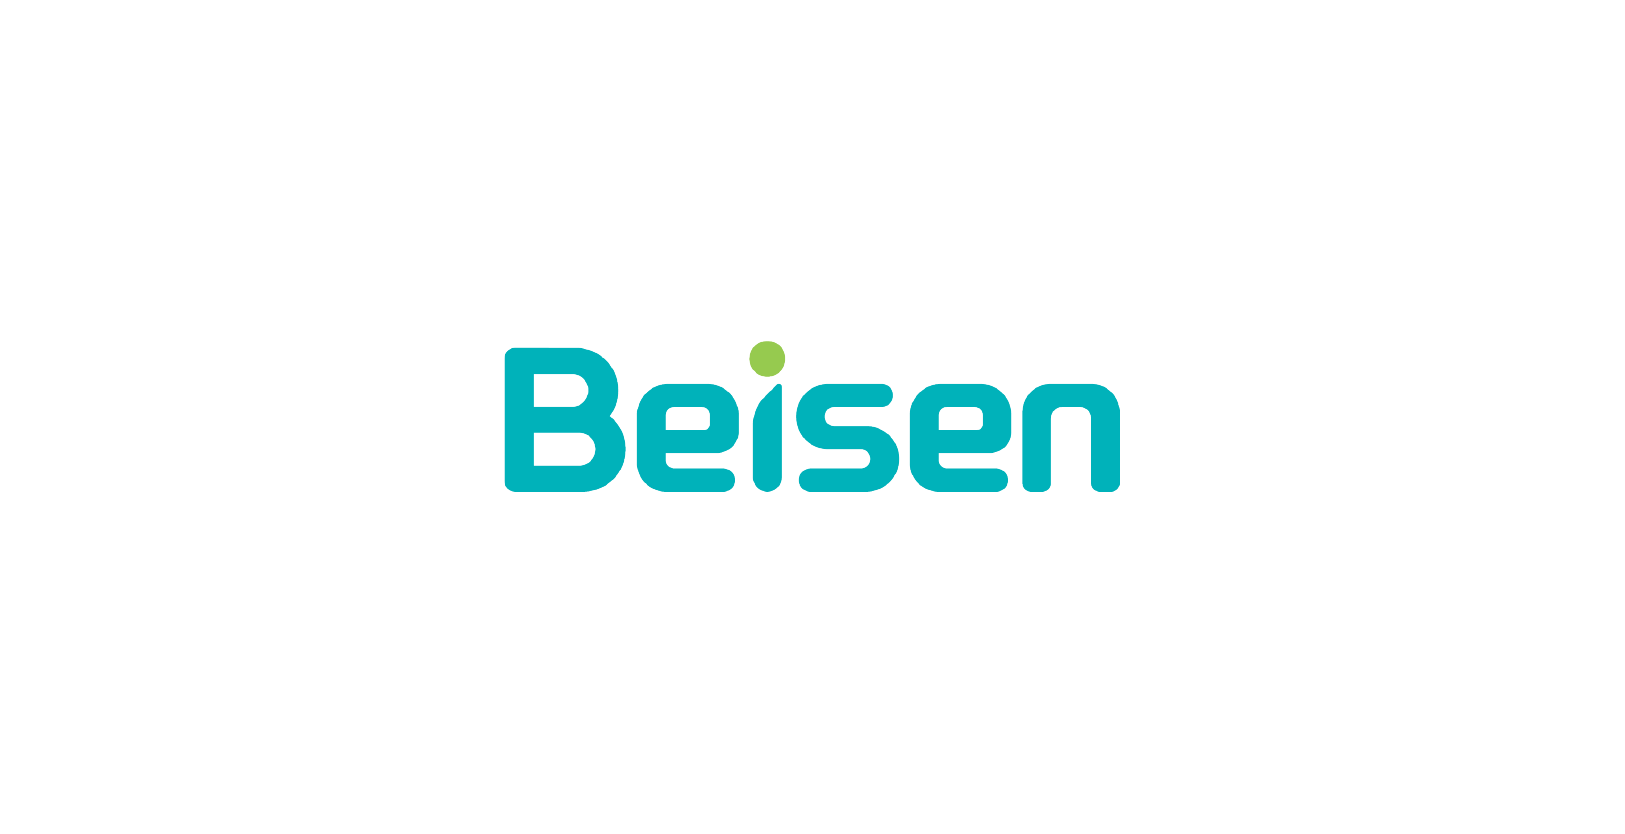 Vision Fund investment portfolio company Beisen's logo